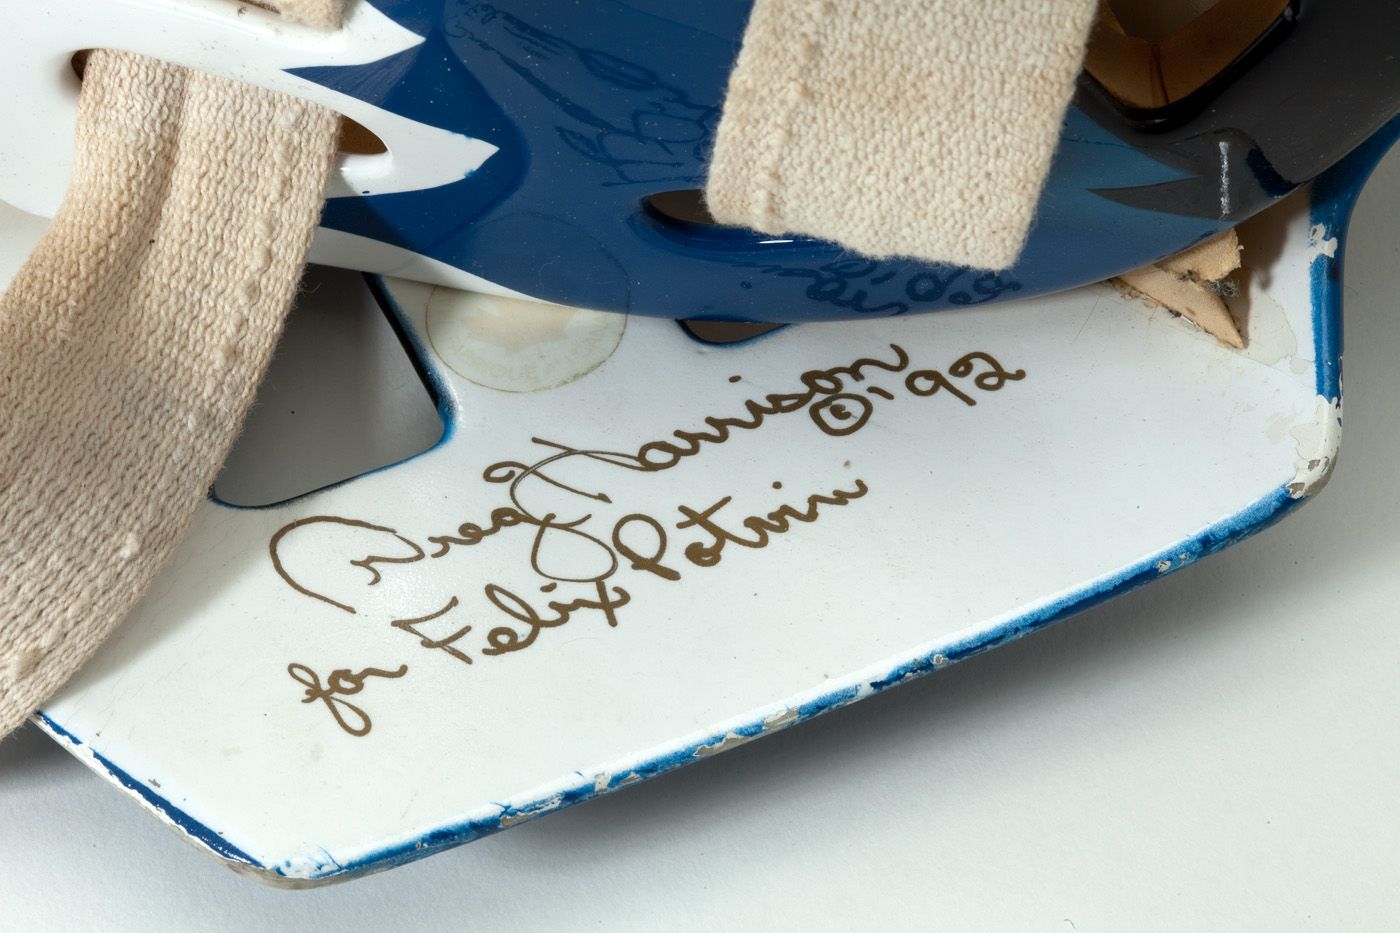 Toronto Marlies goaltender tributes mask to former NHL goaltender Felix  Potvin #Toronto #MapleLeafs